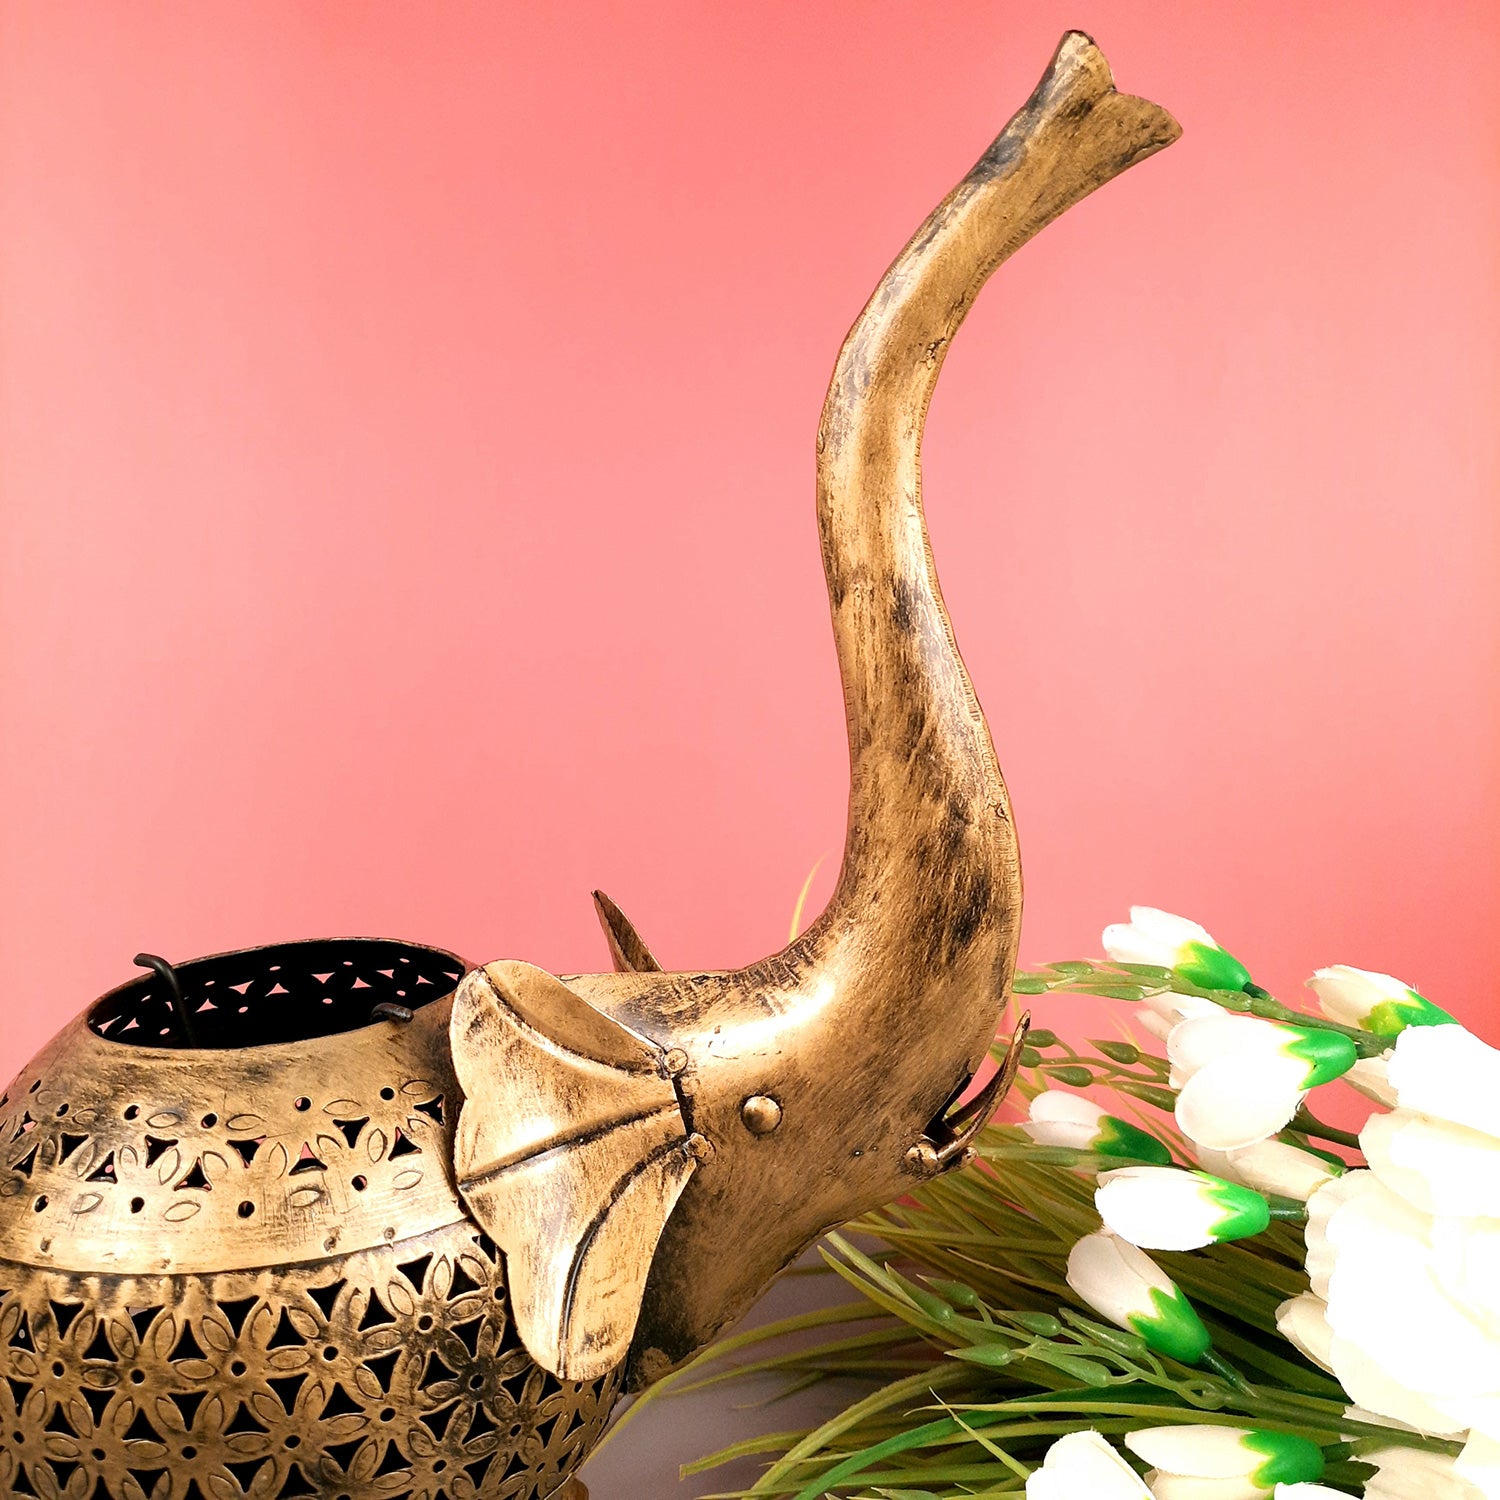 Tealight Candle Holder Set | T Light Candle Stand - Elephant Design | Doop Stand | Antique Tea Light Holders - For Home, Living Room, Table Decoration & Gifts (Set of 2) - apkamart